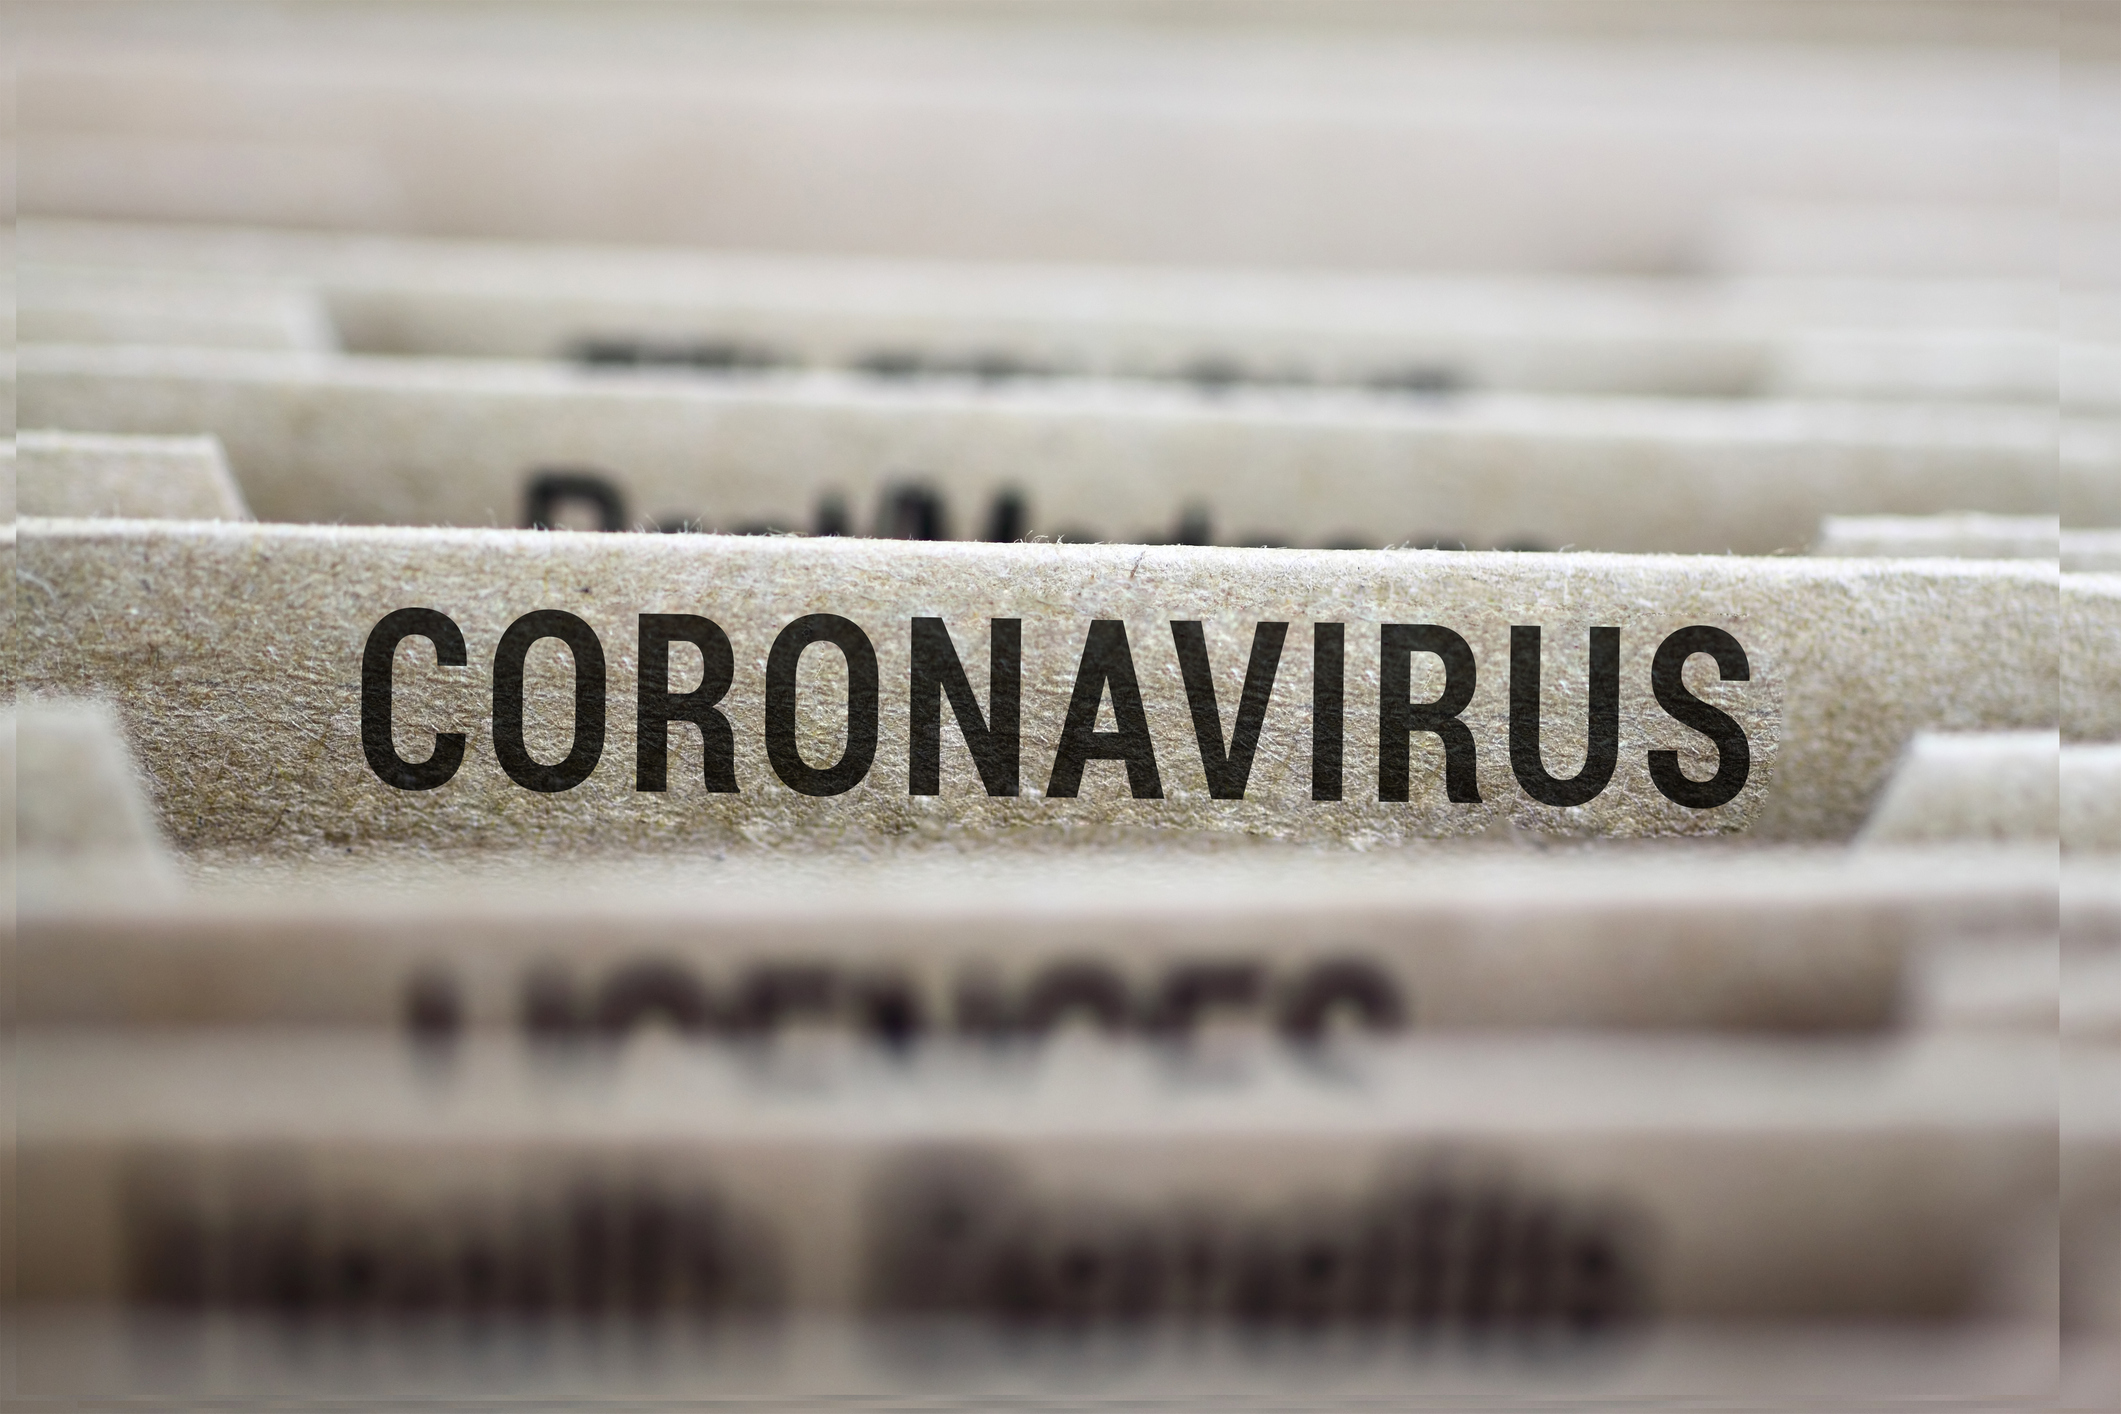 Filing cabinet closeup image with a file named Coronavirus